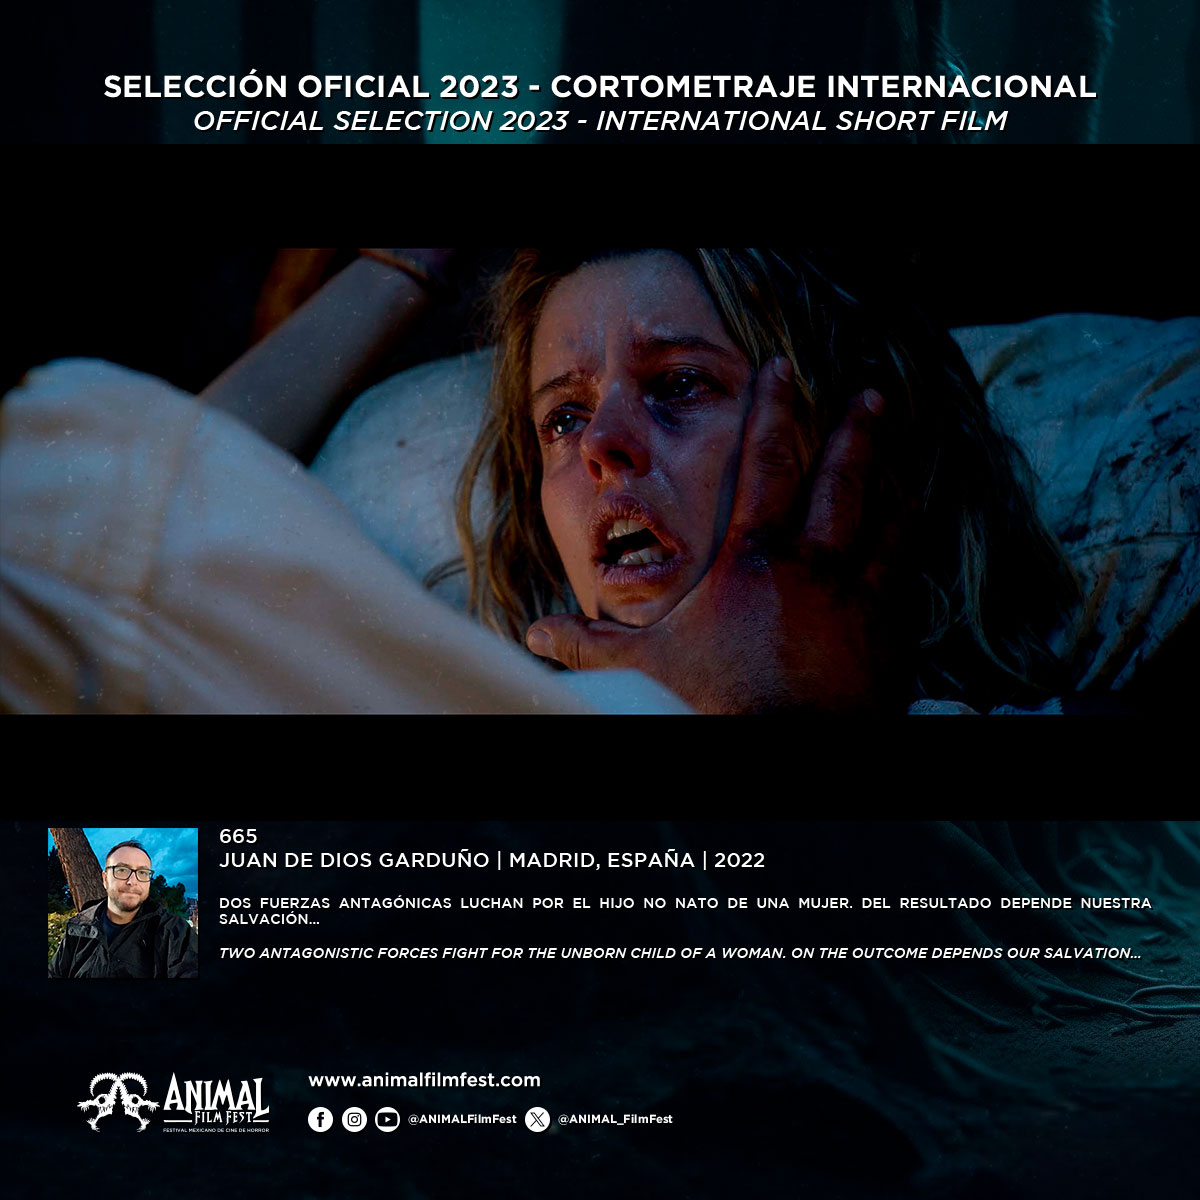 🇪🇸 665
Juan De Dios Garduño | Madrid, España | 2022

animalfilmfest.com/cuartaedicion/…

#SelecciónOficial #ANIMALFilmFest #AFF4 #AFF